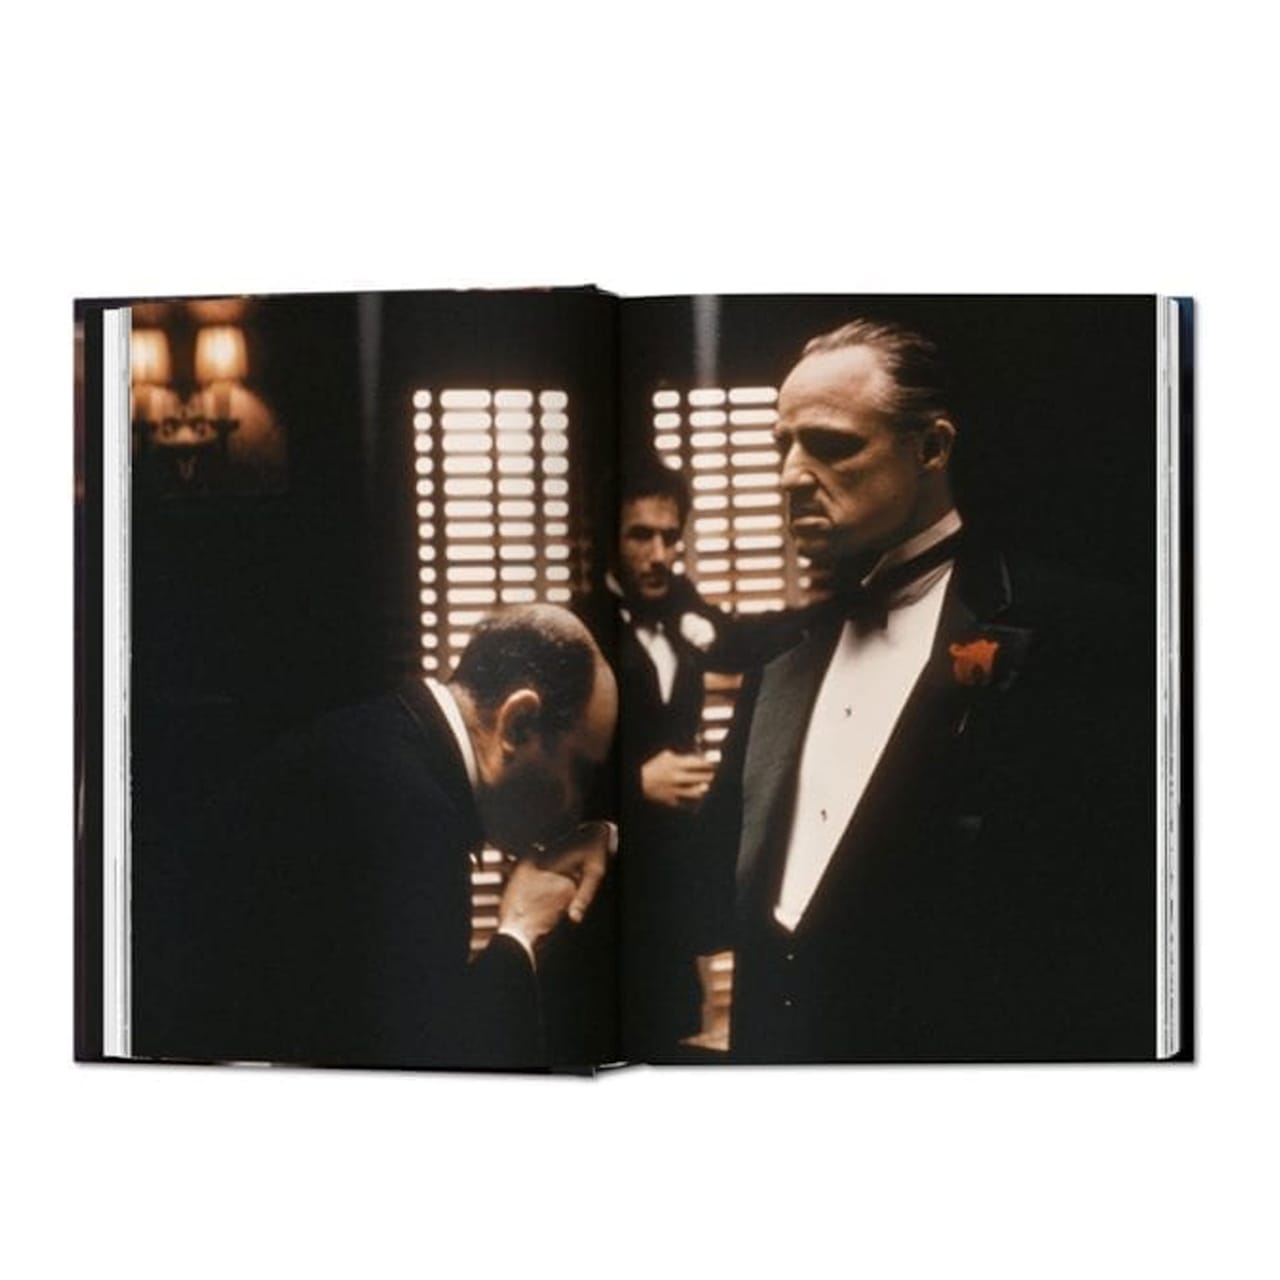 Steve Schapiro. The Godfather Album. 40 series